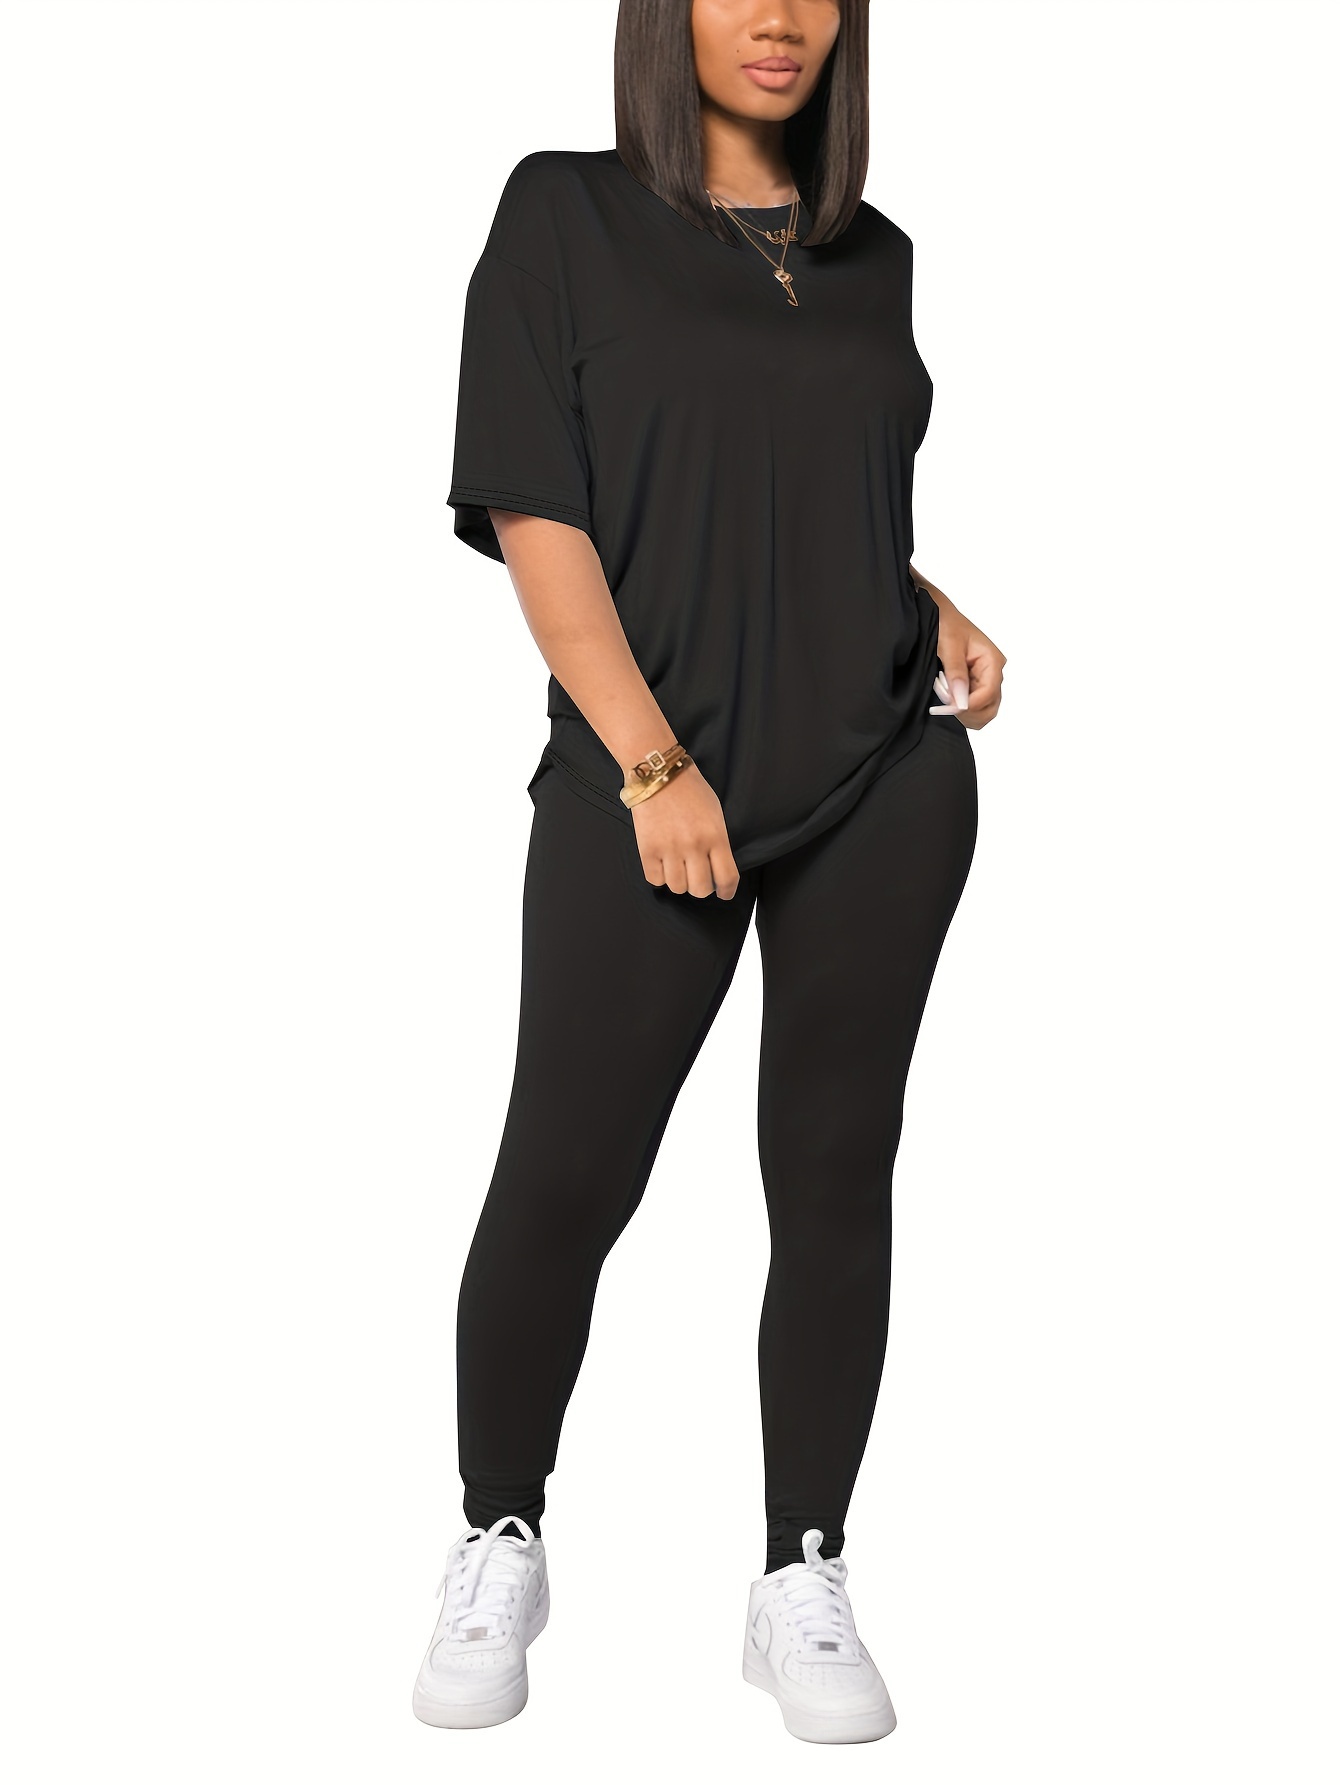 Women Full Length Solid T-Shirt Set With Leggings Black Small Black Small 